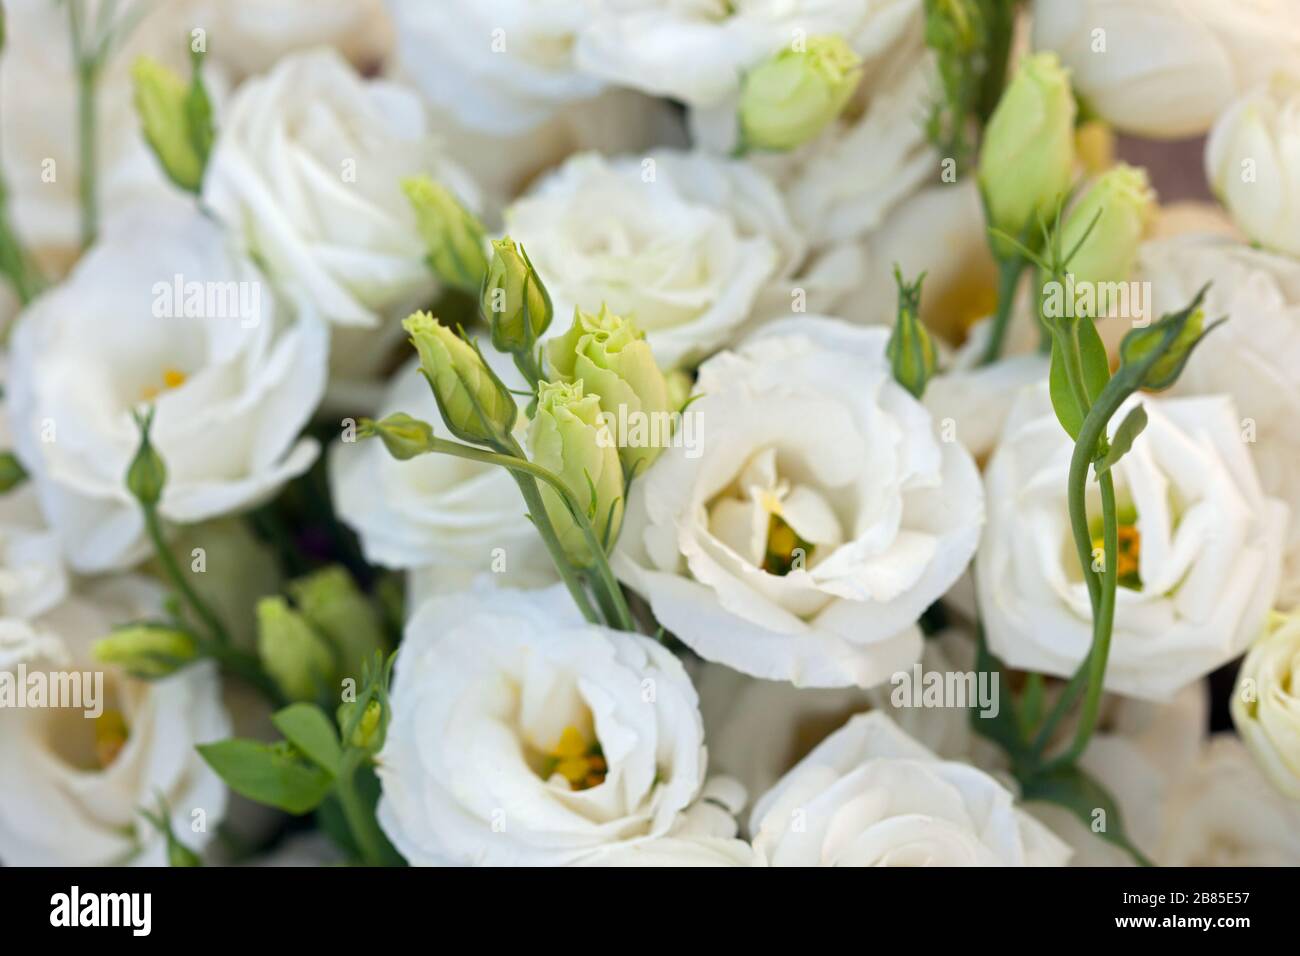 Weiße schöne Eustoma-Blumen, Lisianthus, Tulpengentian, Eustomas. Hintergrund des Vollformatsrahmens. Stockfoto